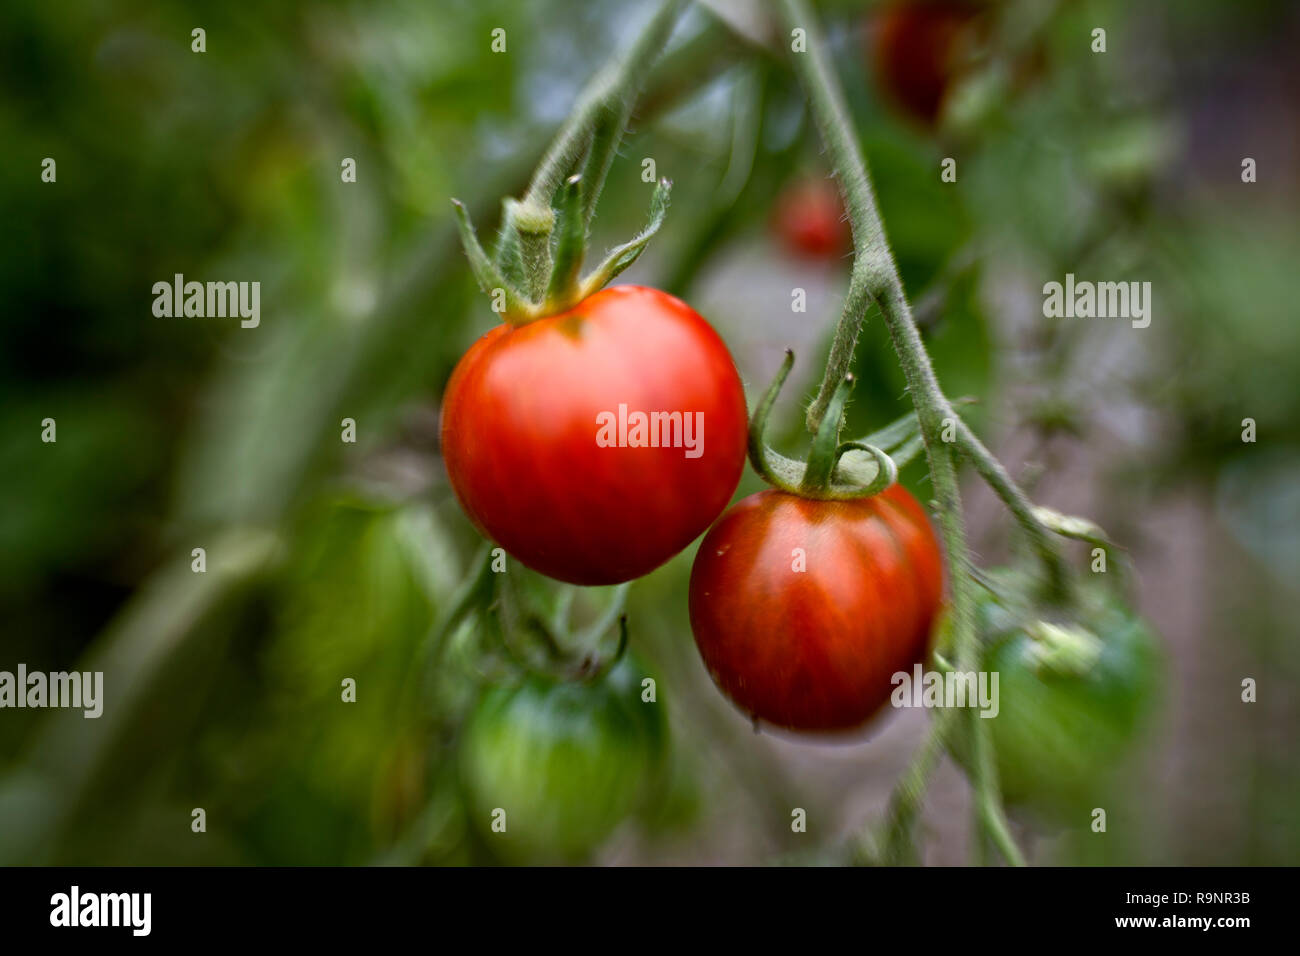 LB00015-00...WASHINGTON - Tomato grown in an urban garden. LensBaby photo. Stock Photo